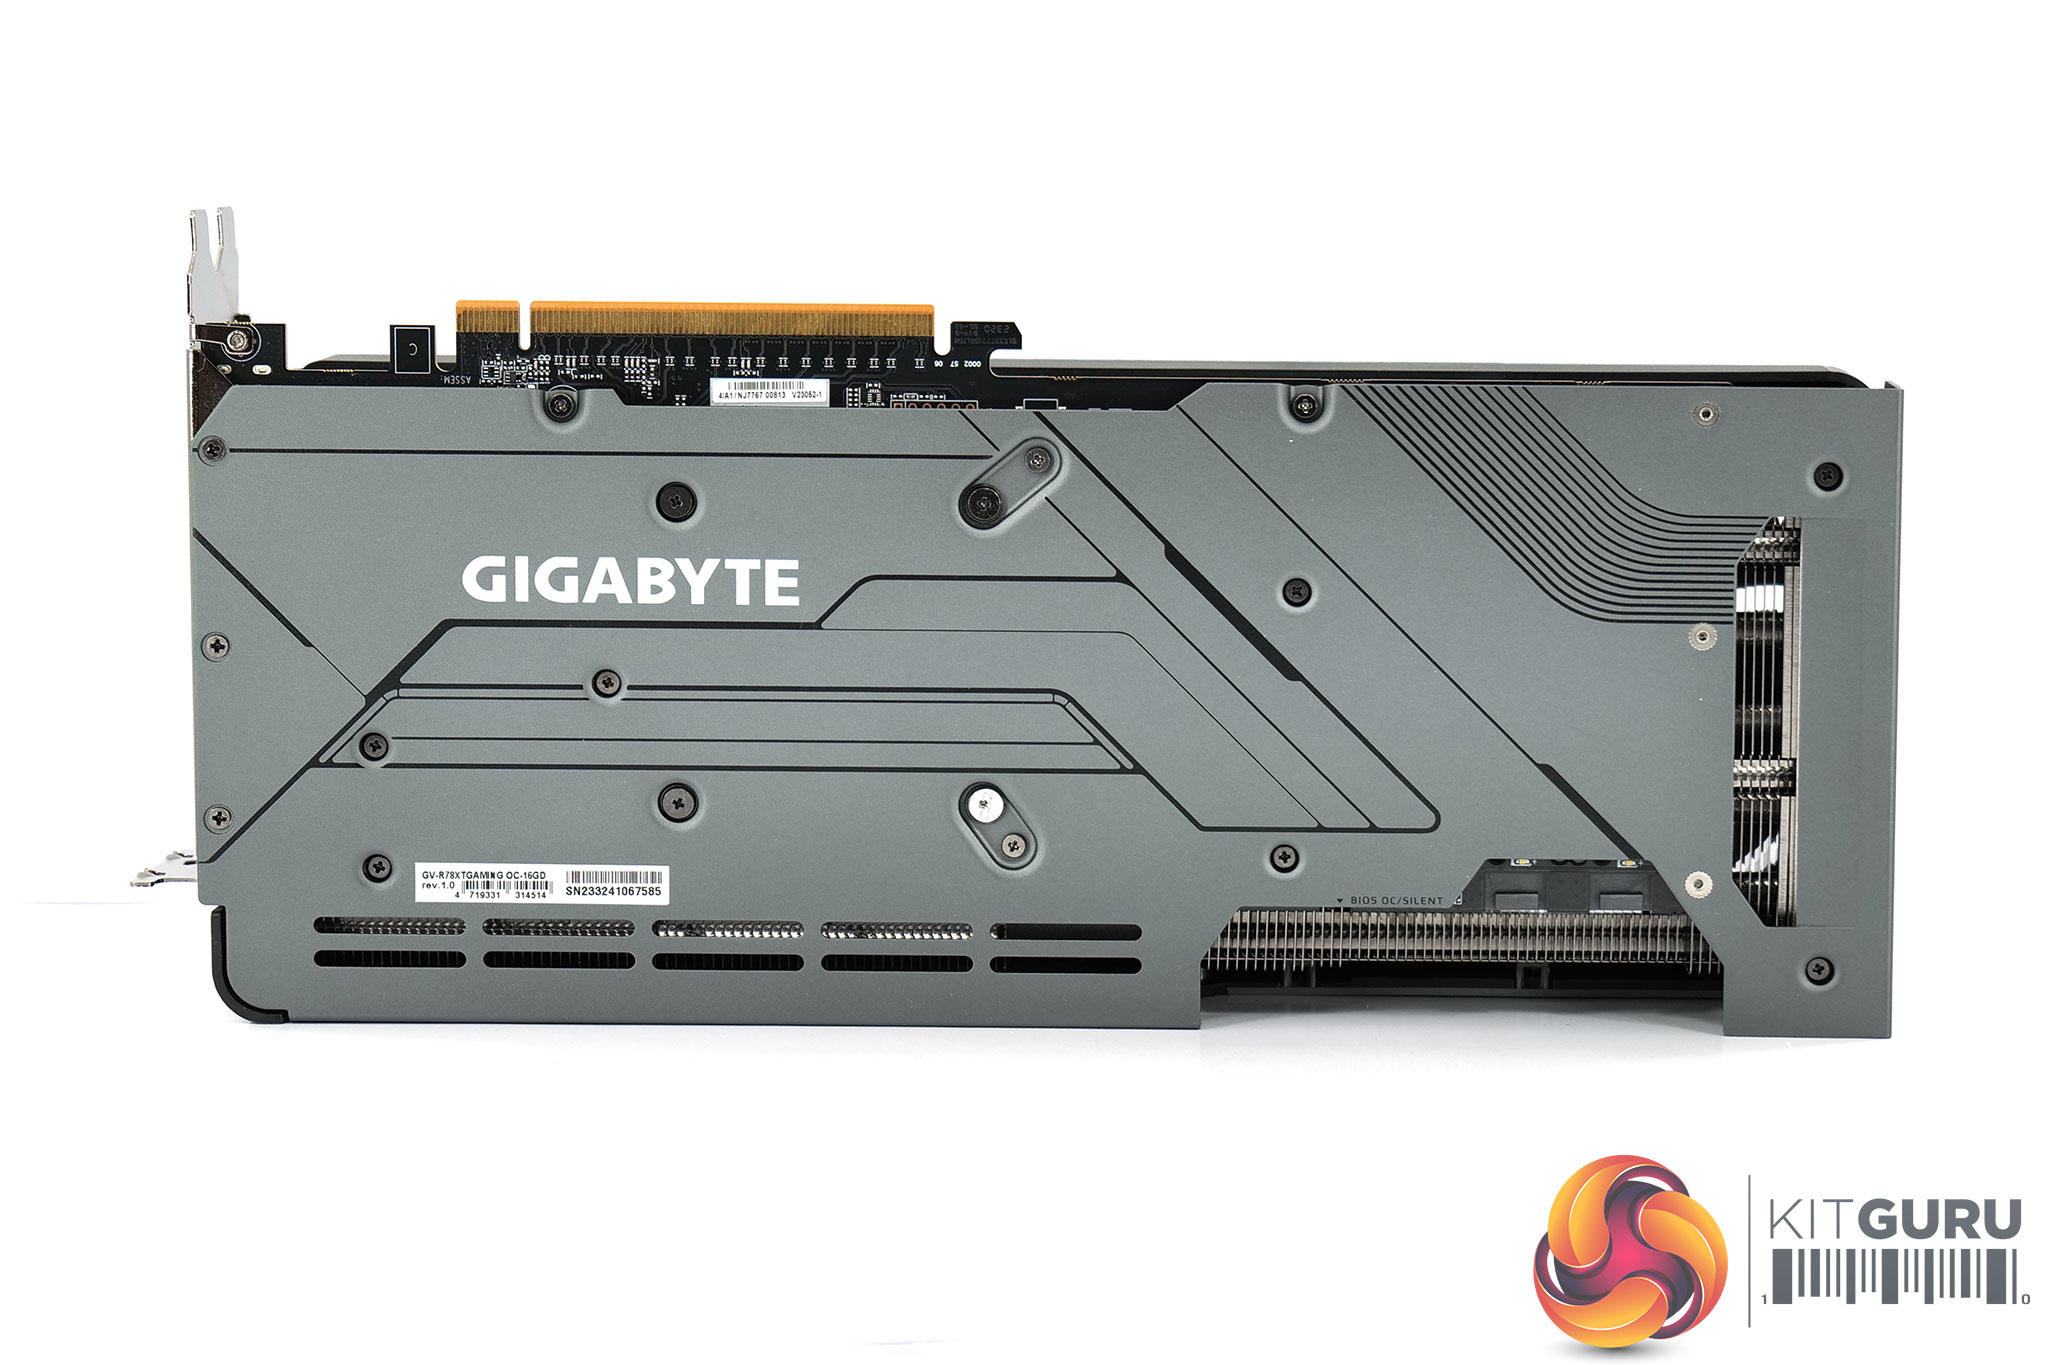 Gigabyte RX 7800 XT Gaming OC 16GB Graphics Card Review - eTeknix